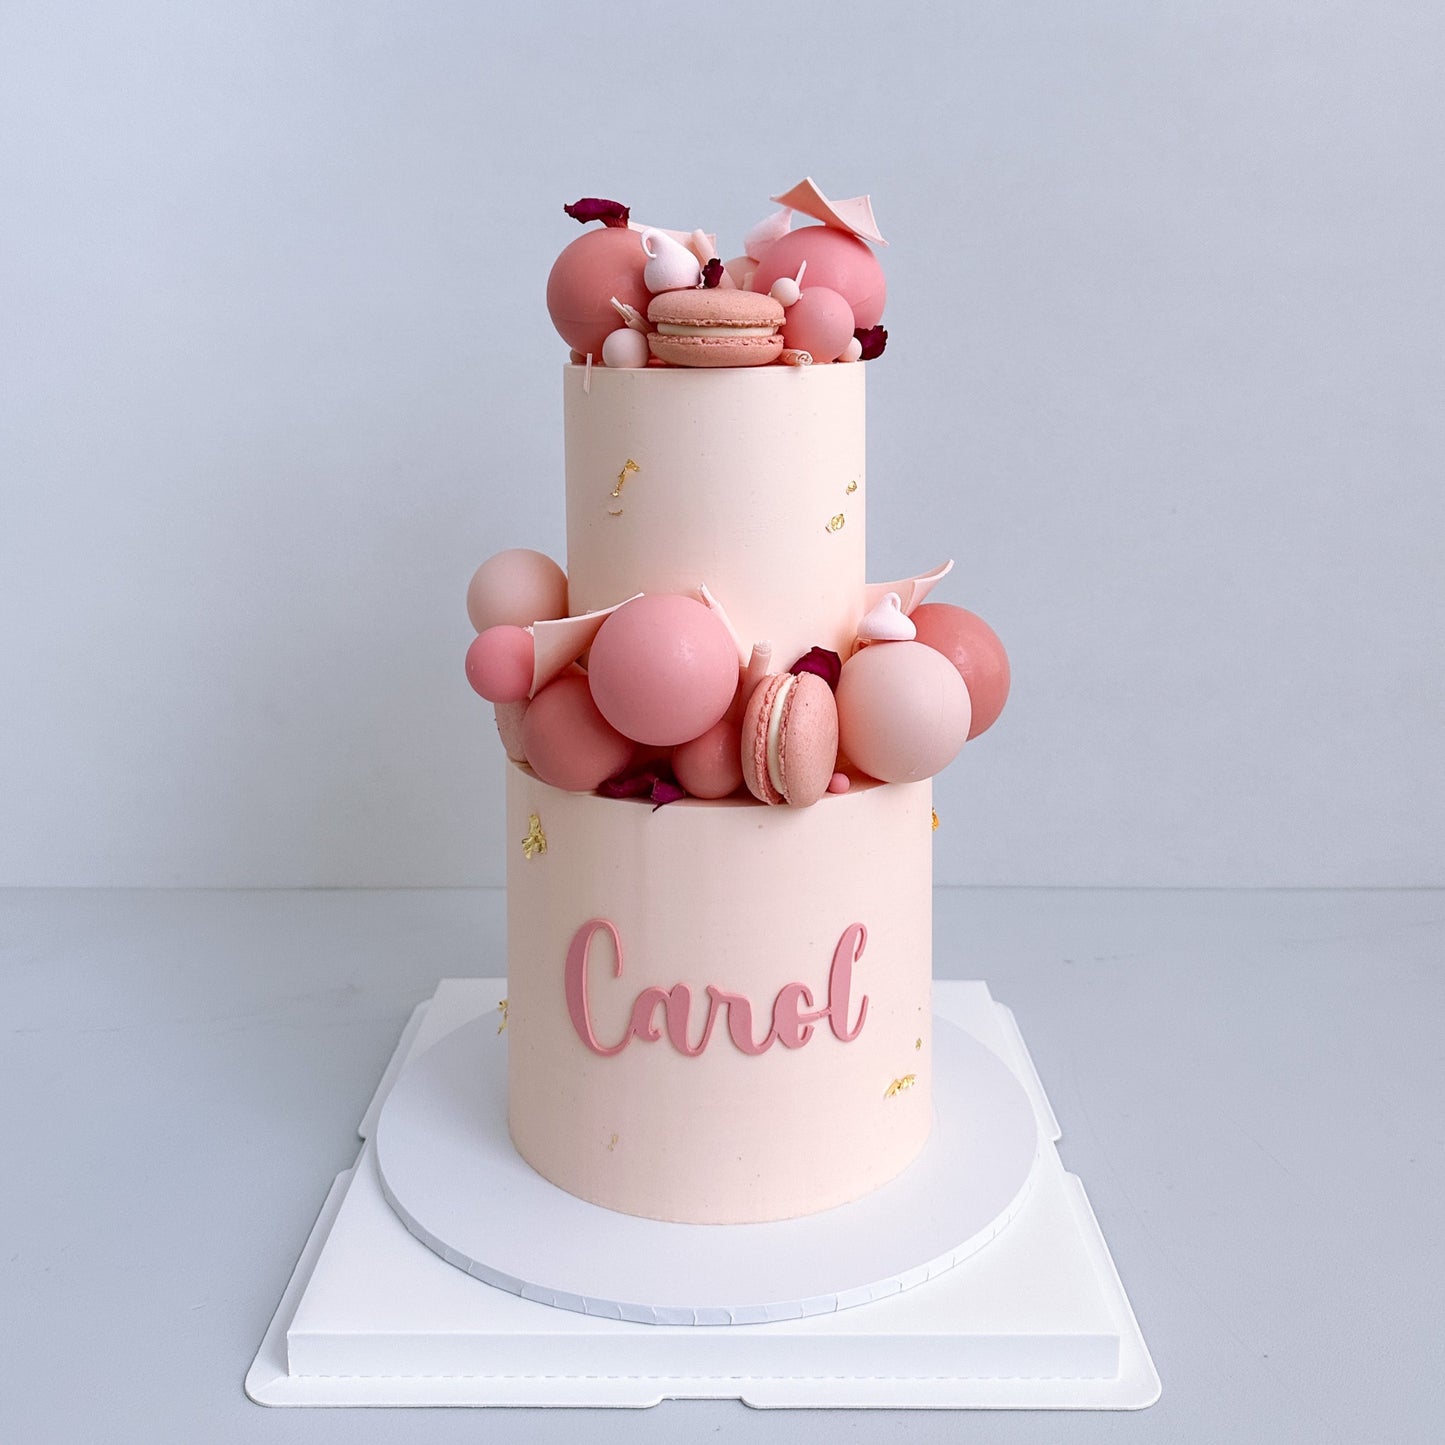 WREATH CAKE - Aukland cake